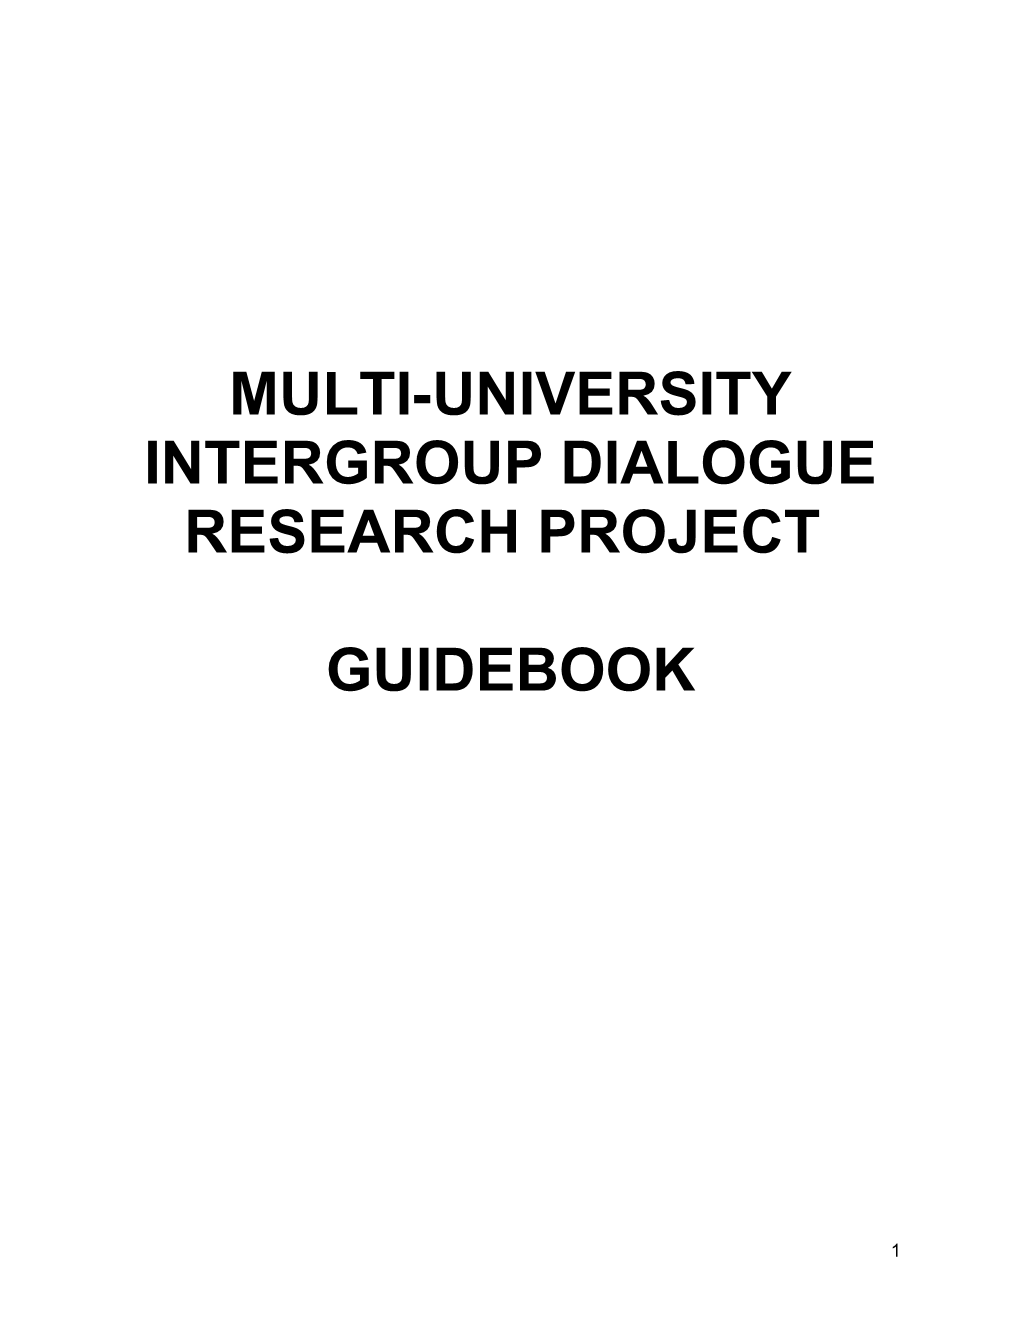 Multi-University Intergroup Dialogue